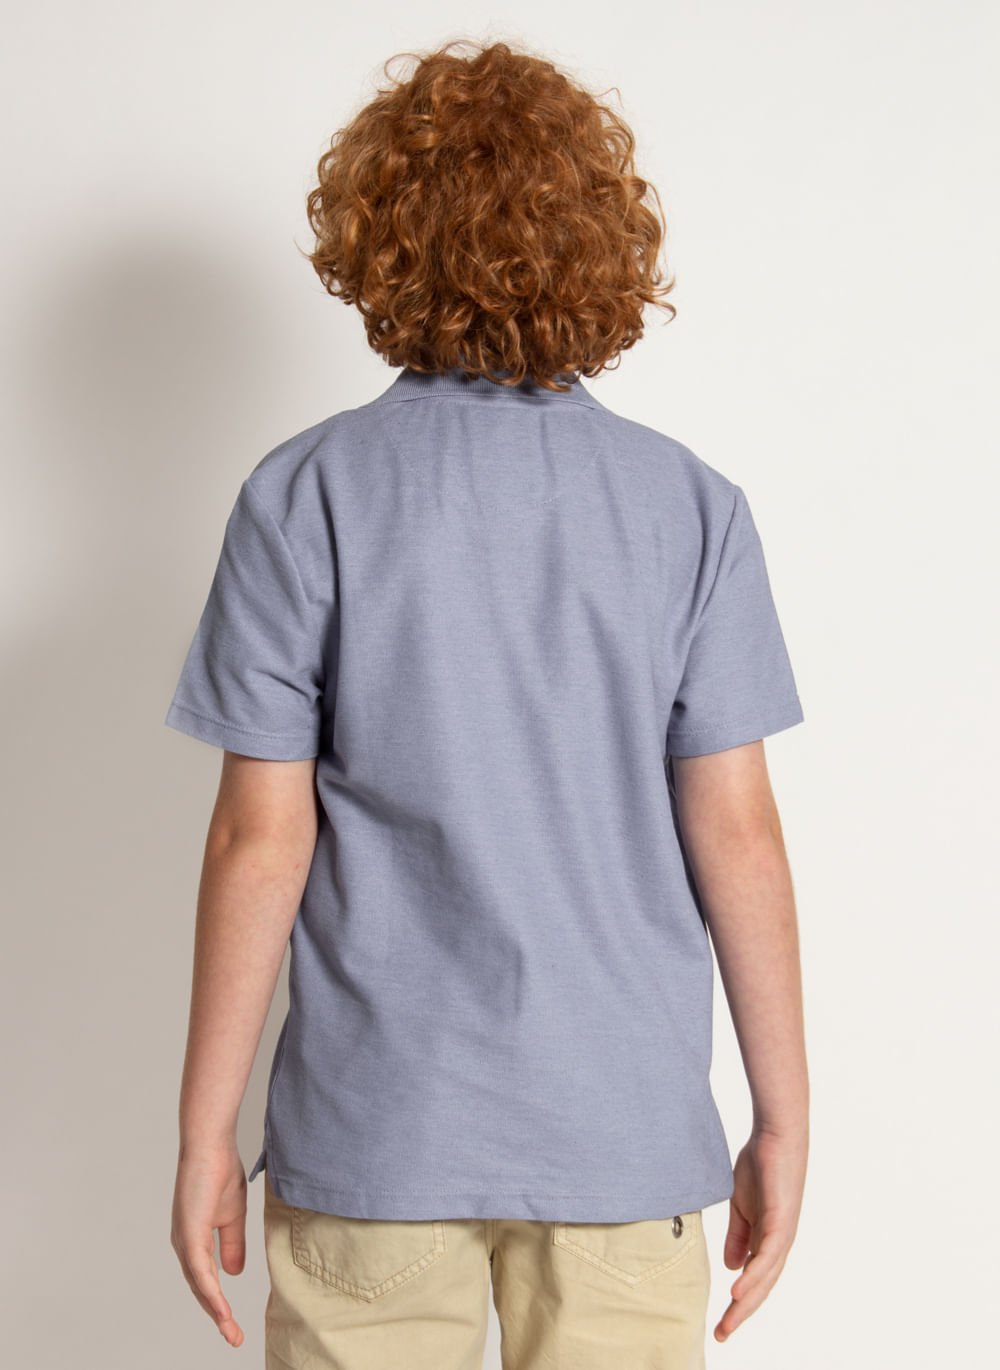 camisa-polo-aleatory-infantil-lisa-recortada-azul-modelo-2020-2-